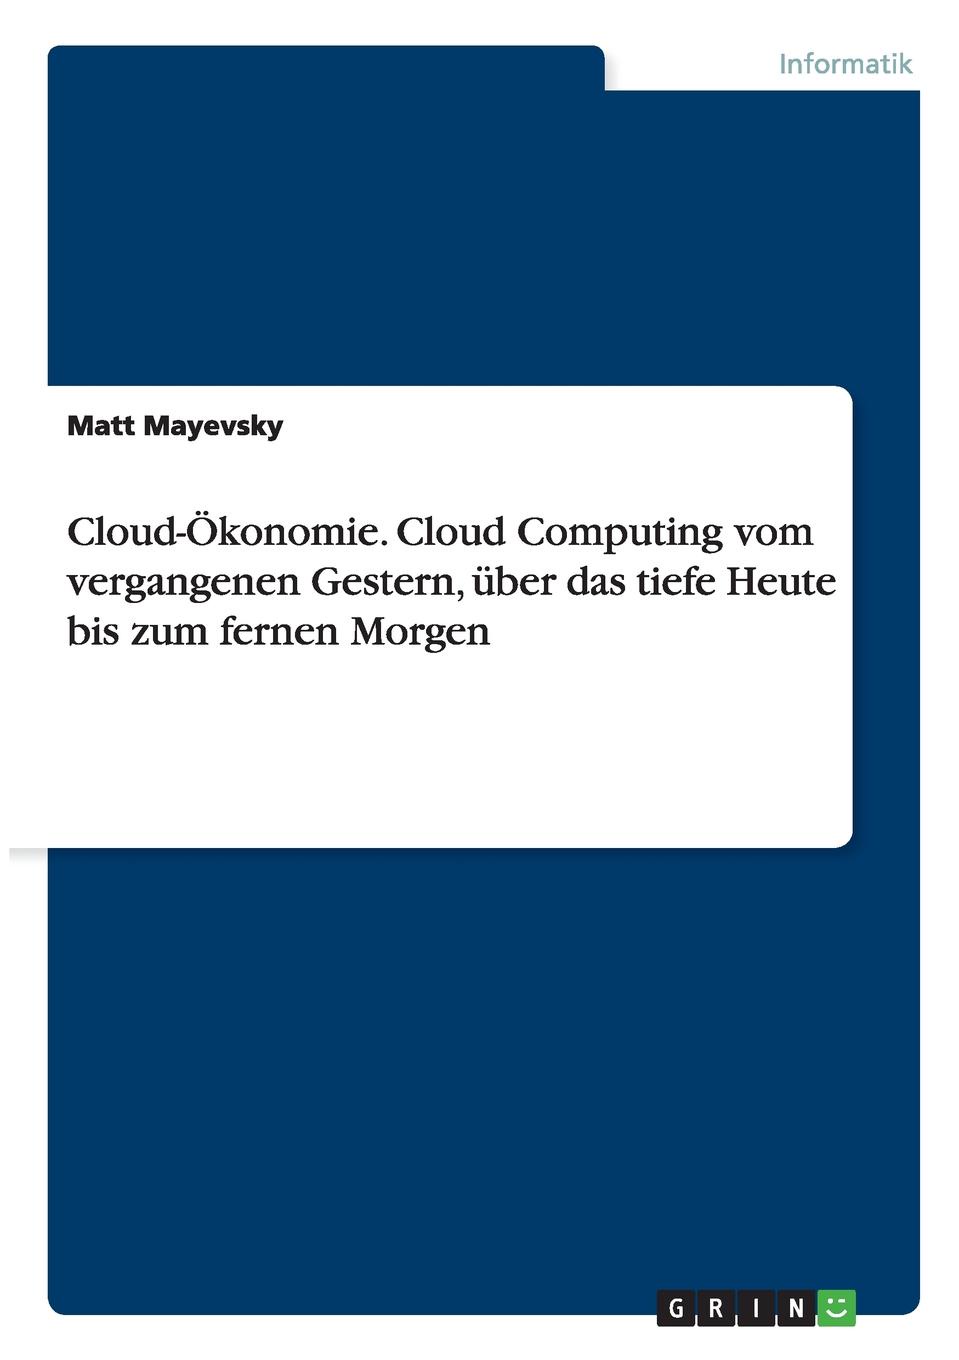 Cloud-Okonomie. Cloud Computing vom vergangenen Gestern, uber das tiefe Heute bis zum fernen Morgen